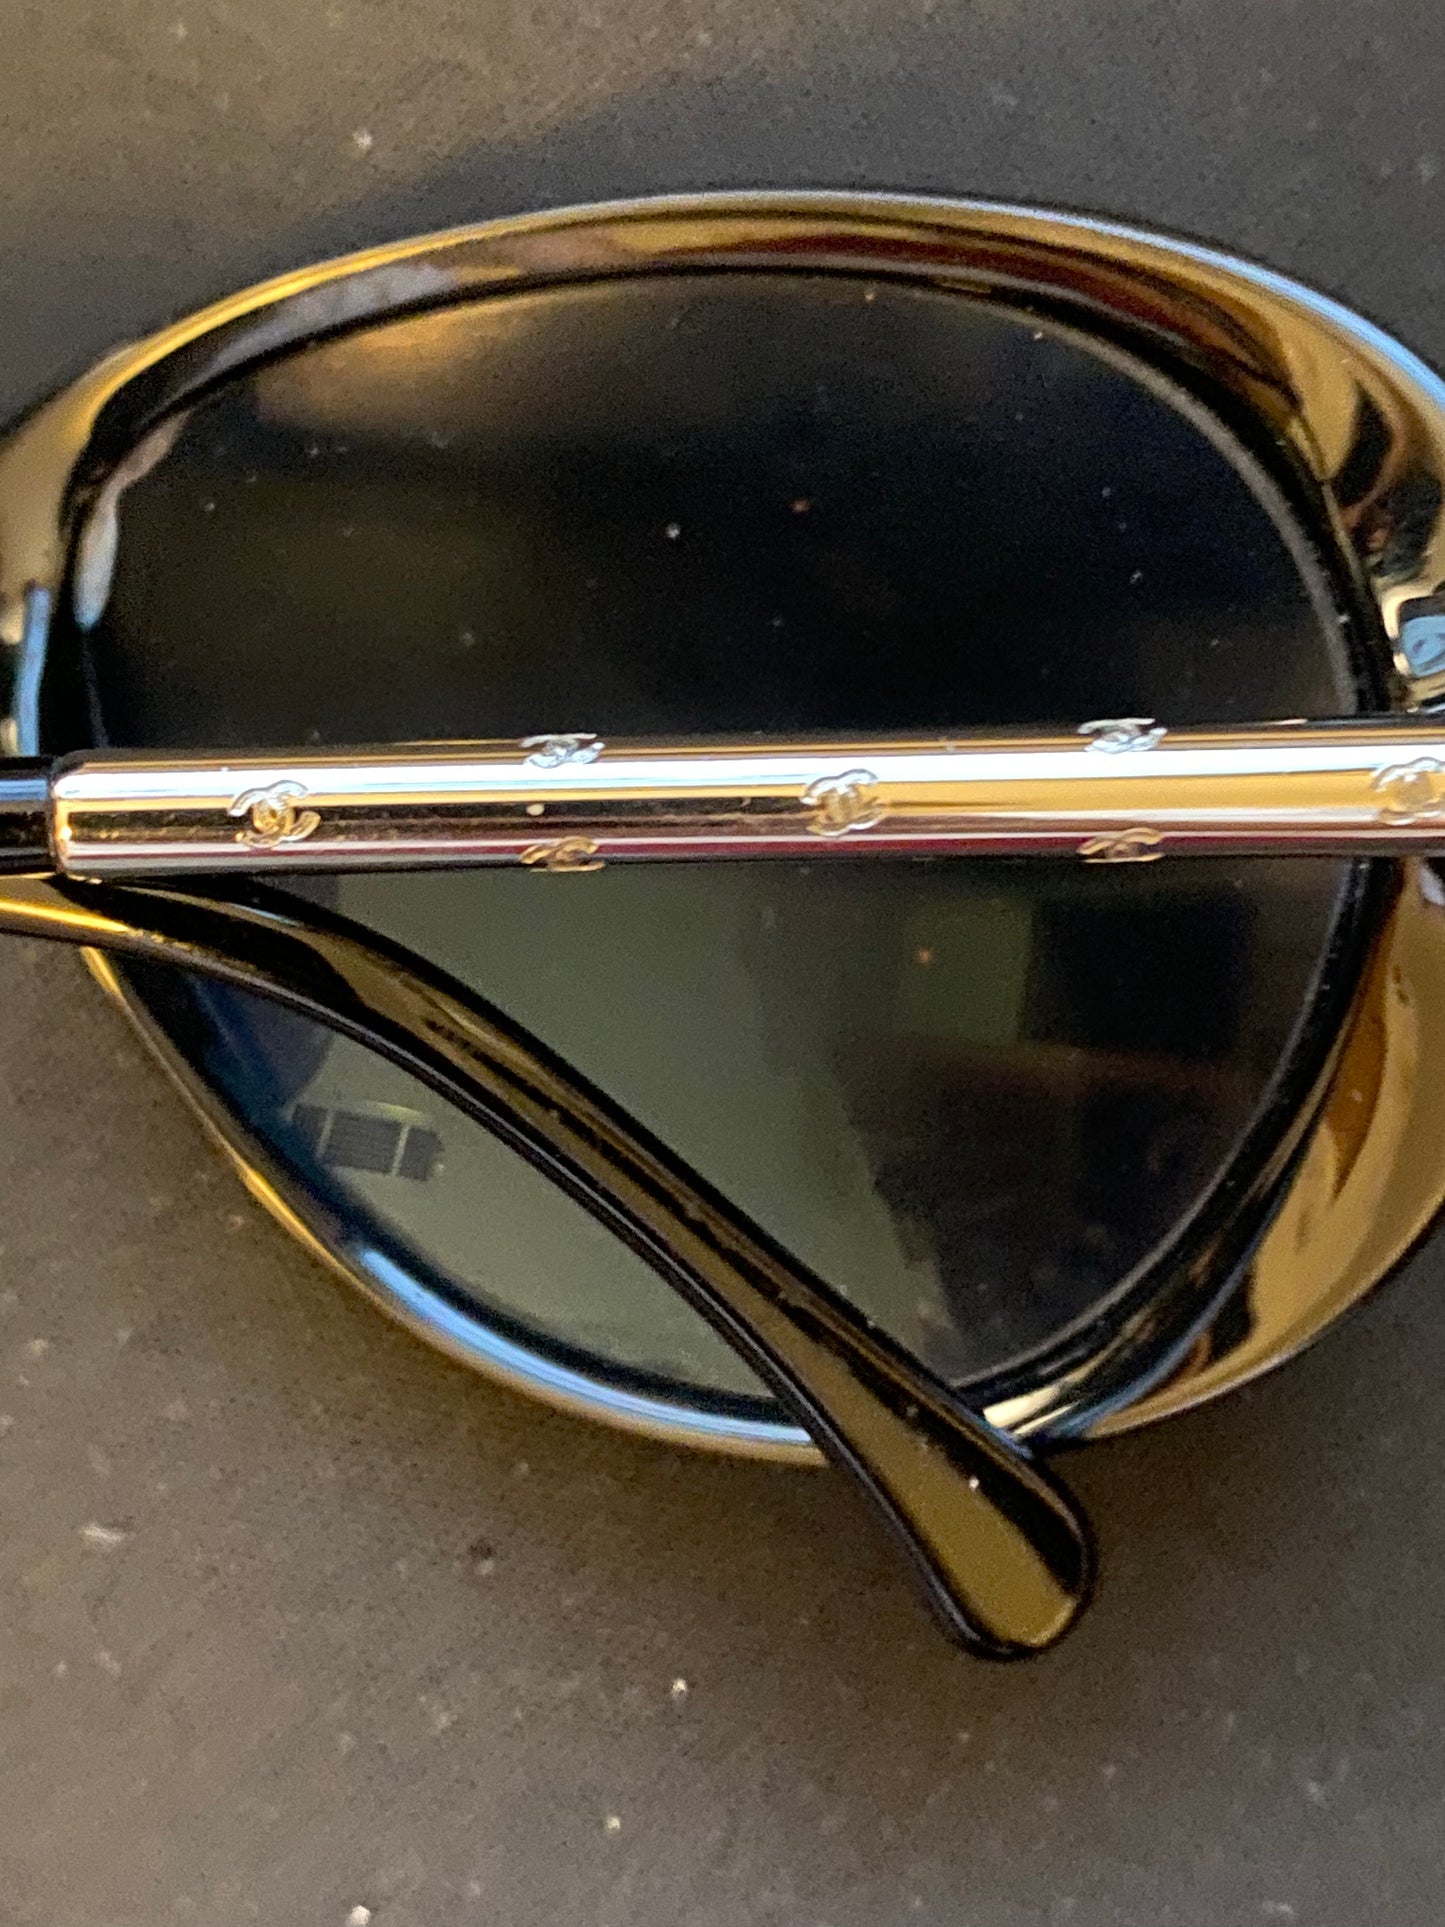 Used Accessories: Chanel Sunglasses